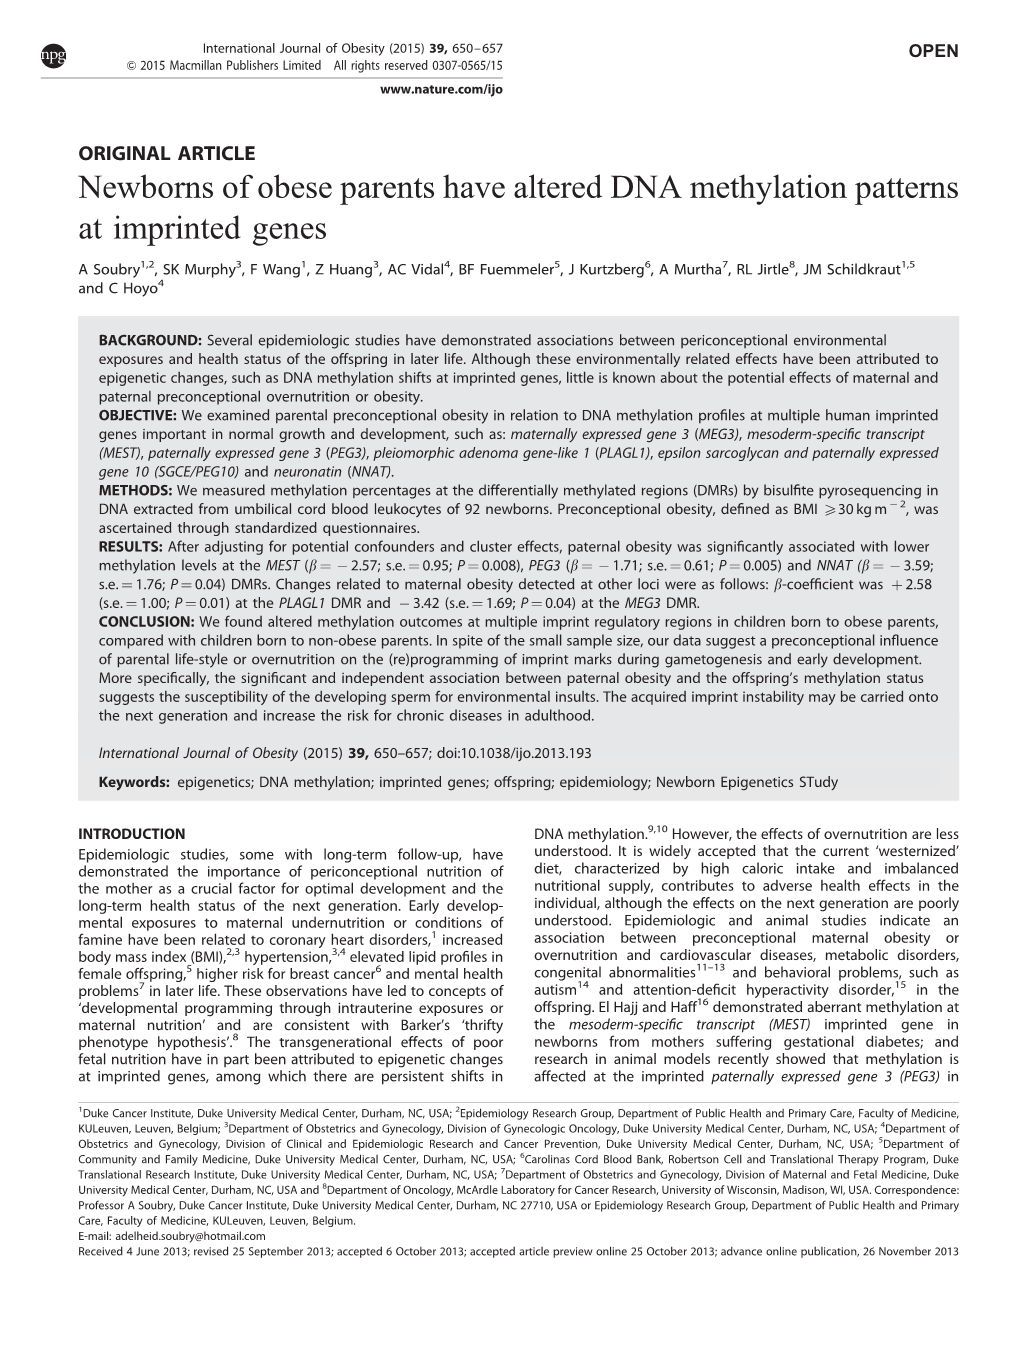 Newborns of Obese Parents Have Altered DNA Methylation Patterns at Imprinted Genes